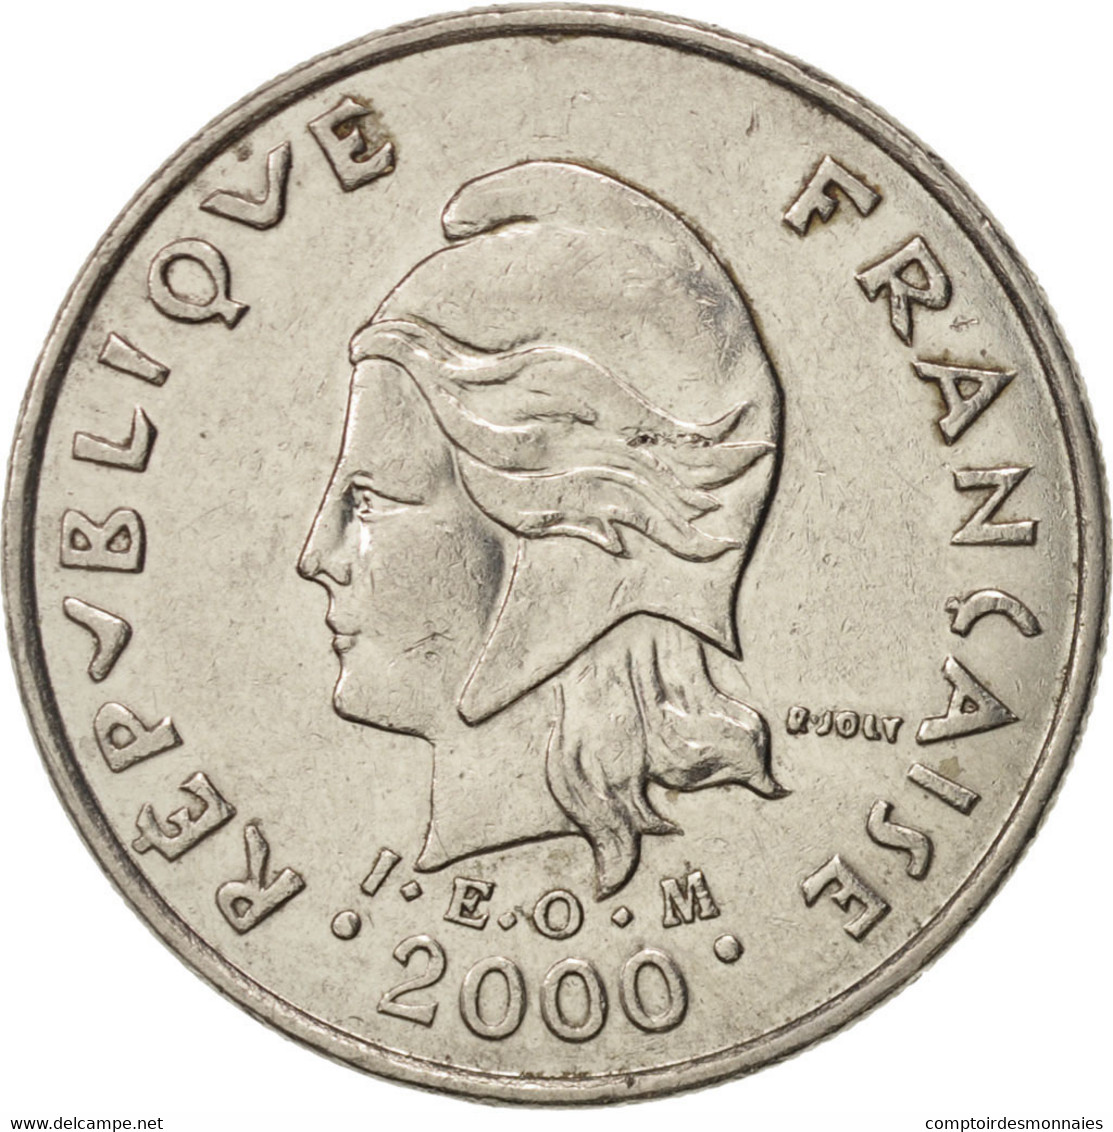 Monnaie, French Polynesia, 10 Francs, 2000, Paris, TTB+, Nickel, KM:8 - Französisch-Polynesien